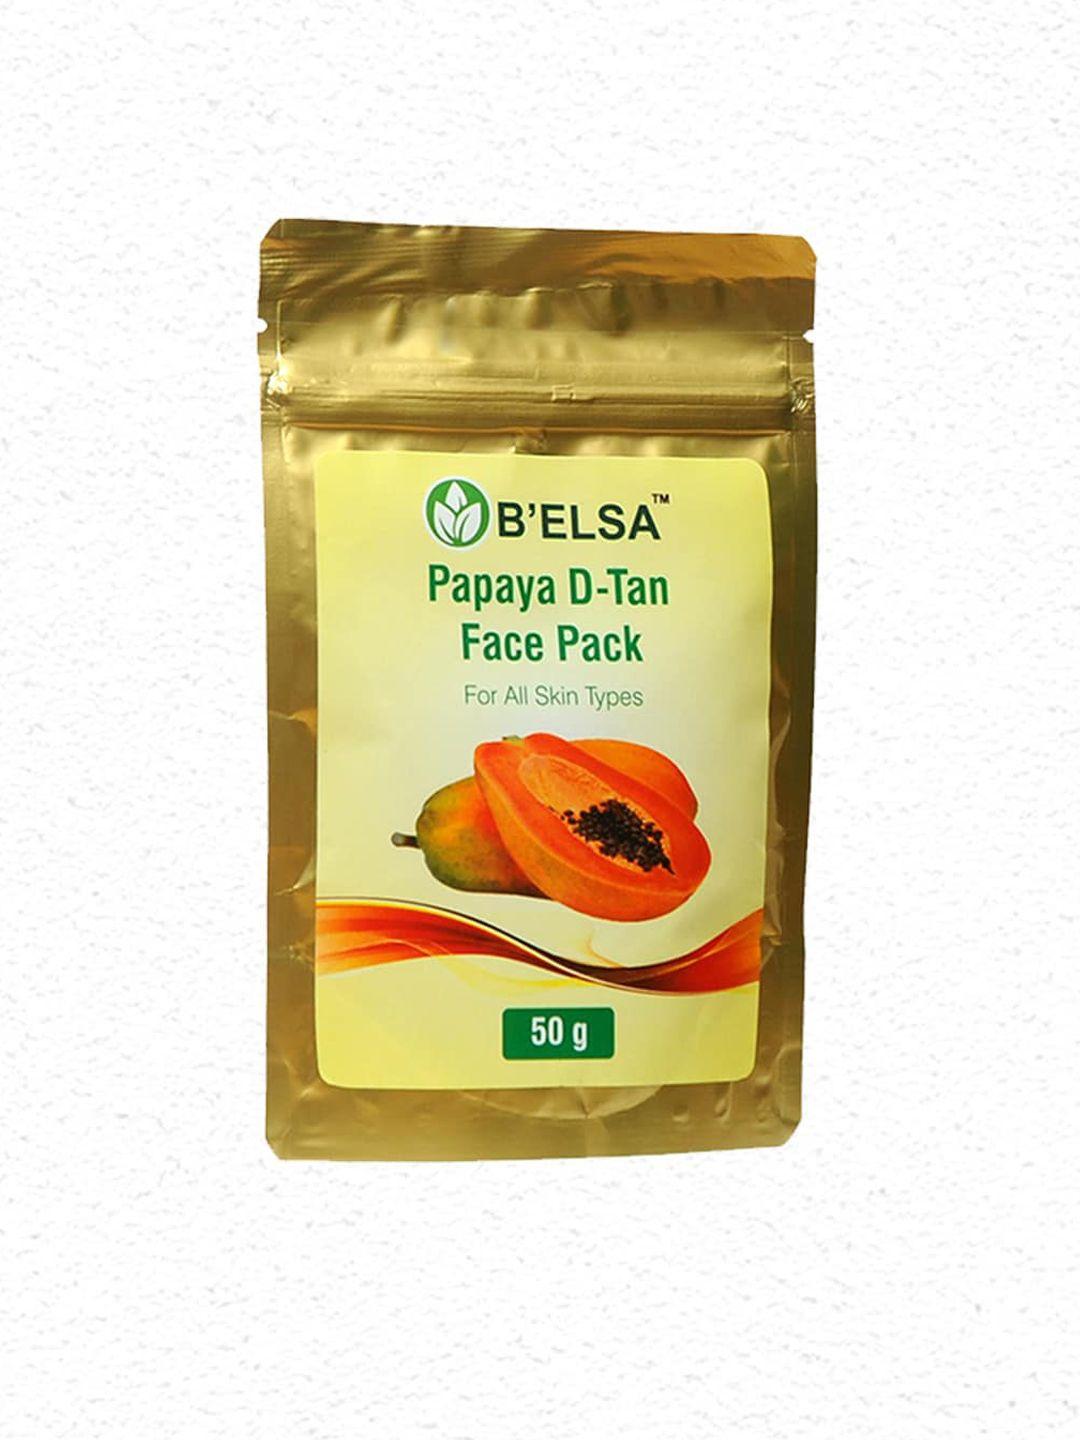 b'elsa herbal papaya d-tan face pack for all skin types - 50 g